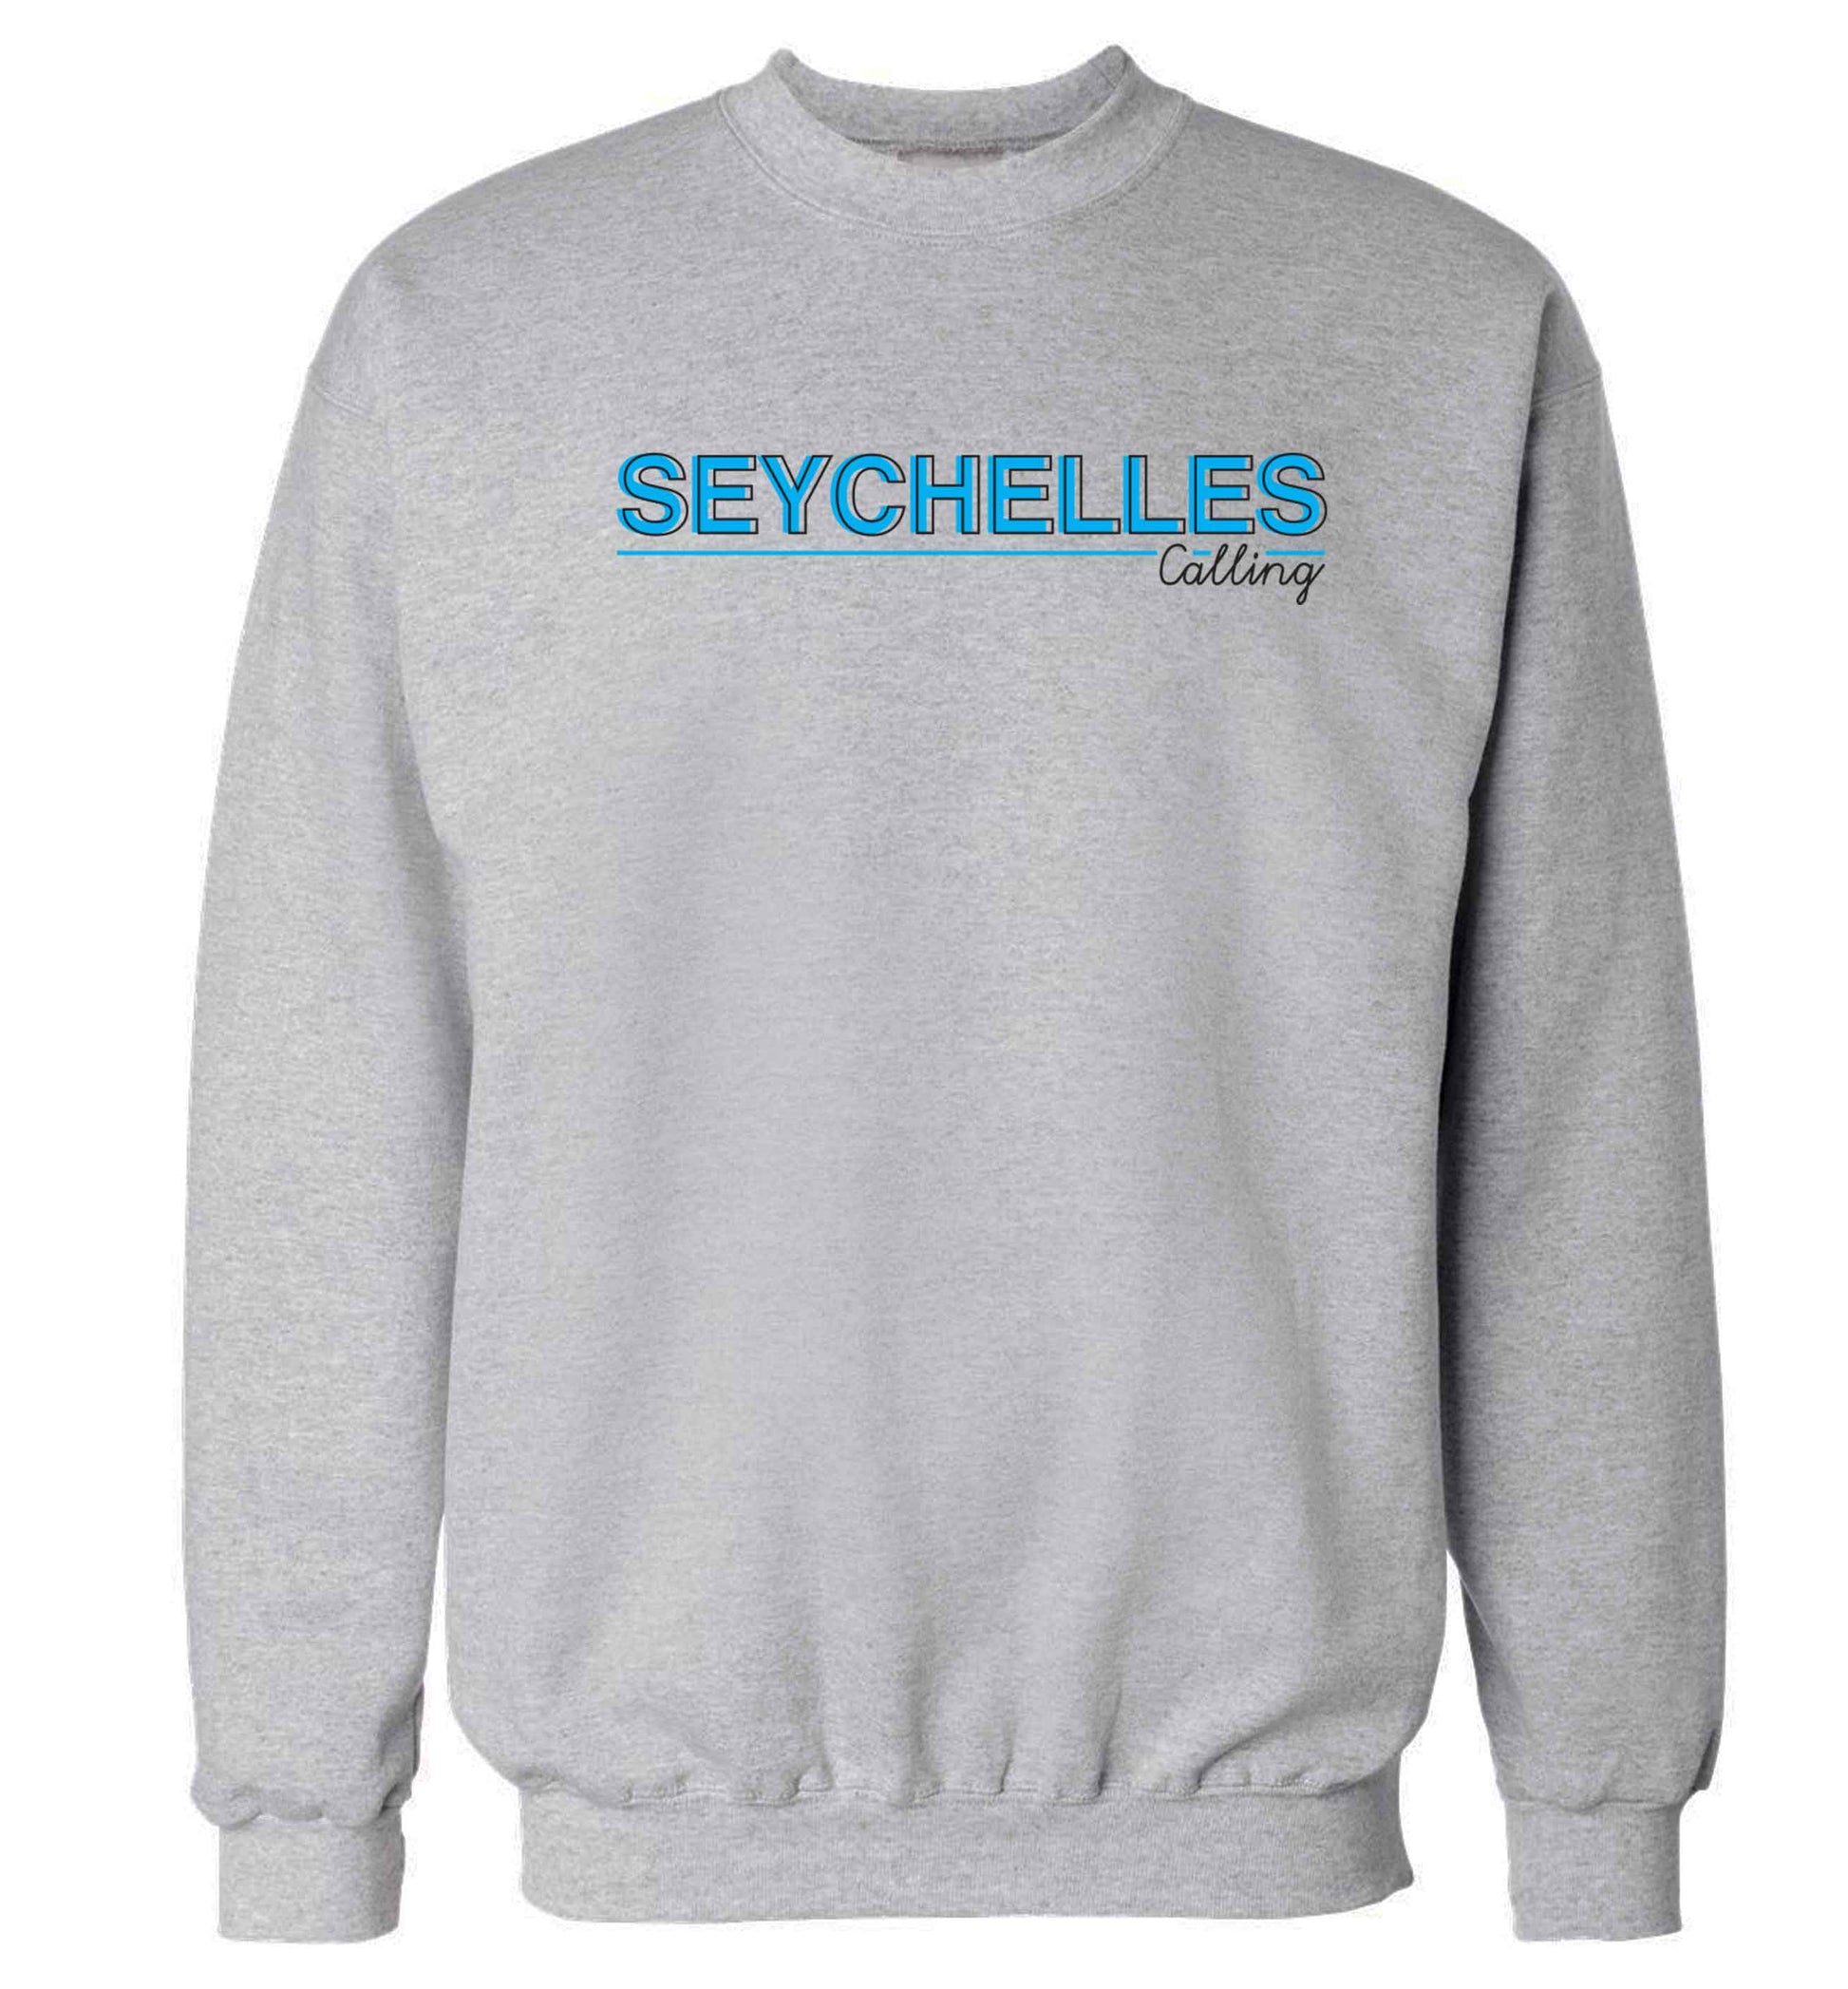 Seychelles calling Adult's unisex grey Sweater 2XL